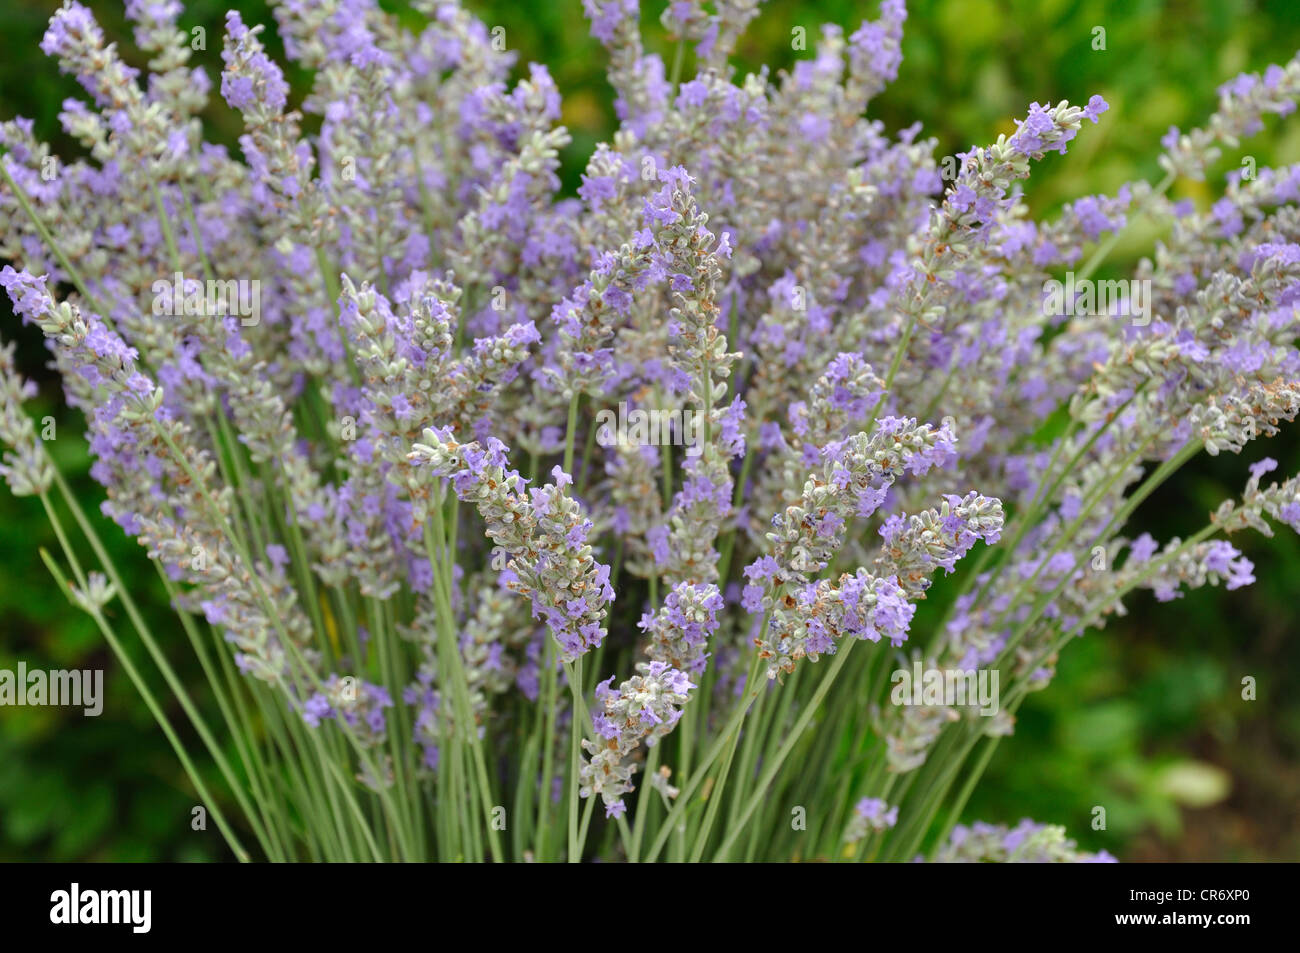 Herb garden - lavender Stock Photo